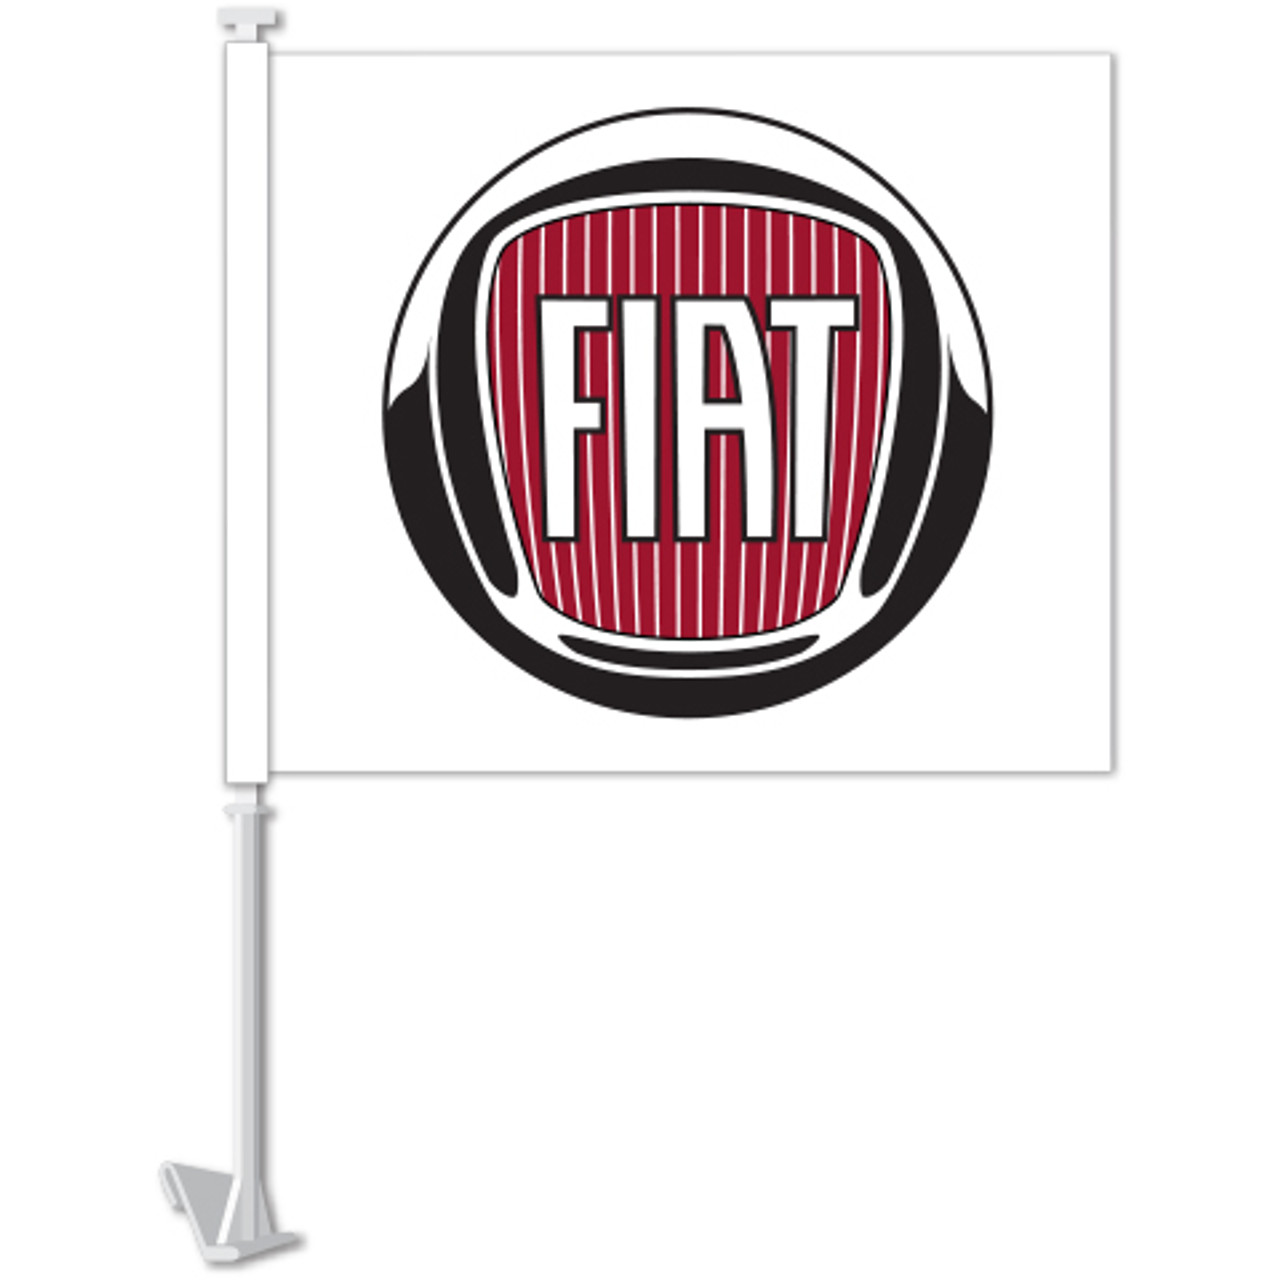 Manufacturer Clip-On Flag - Fiat - Qty. 1